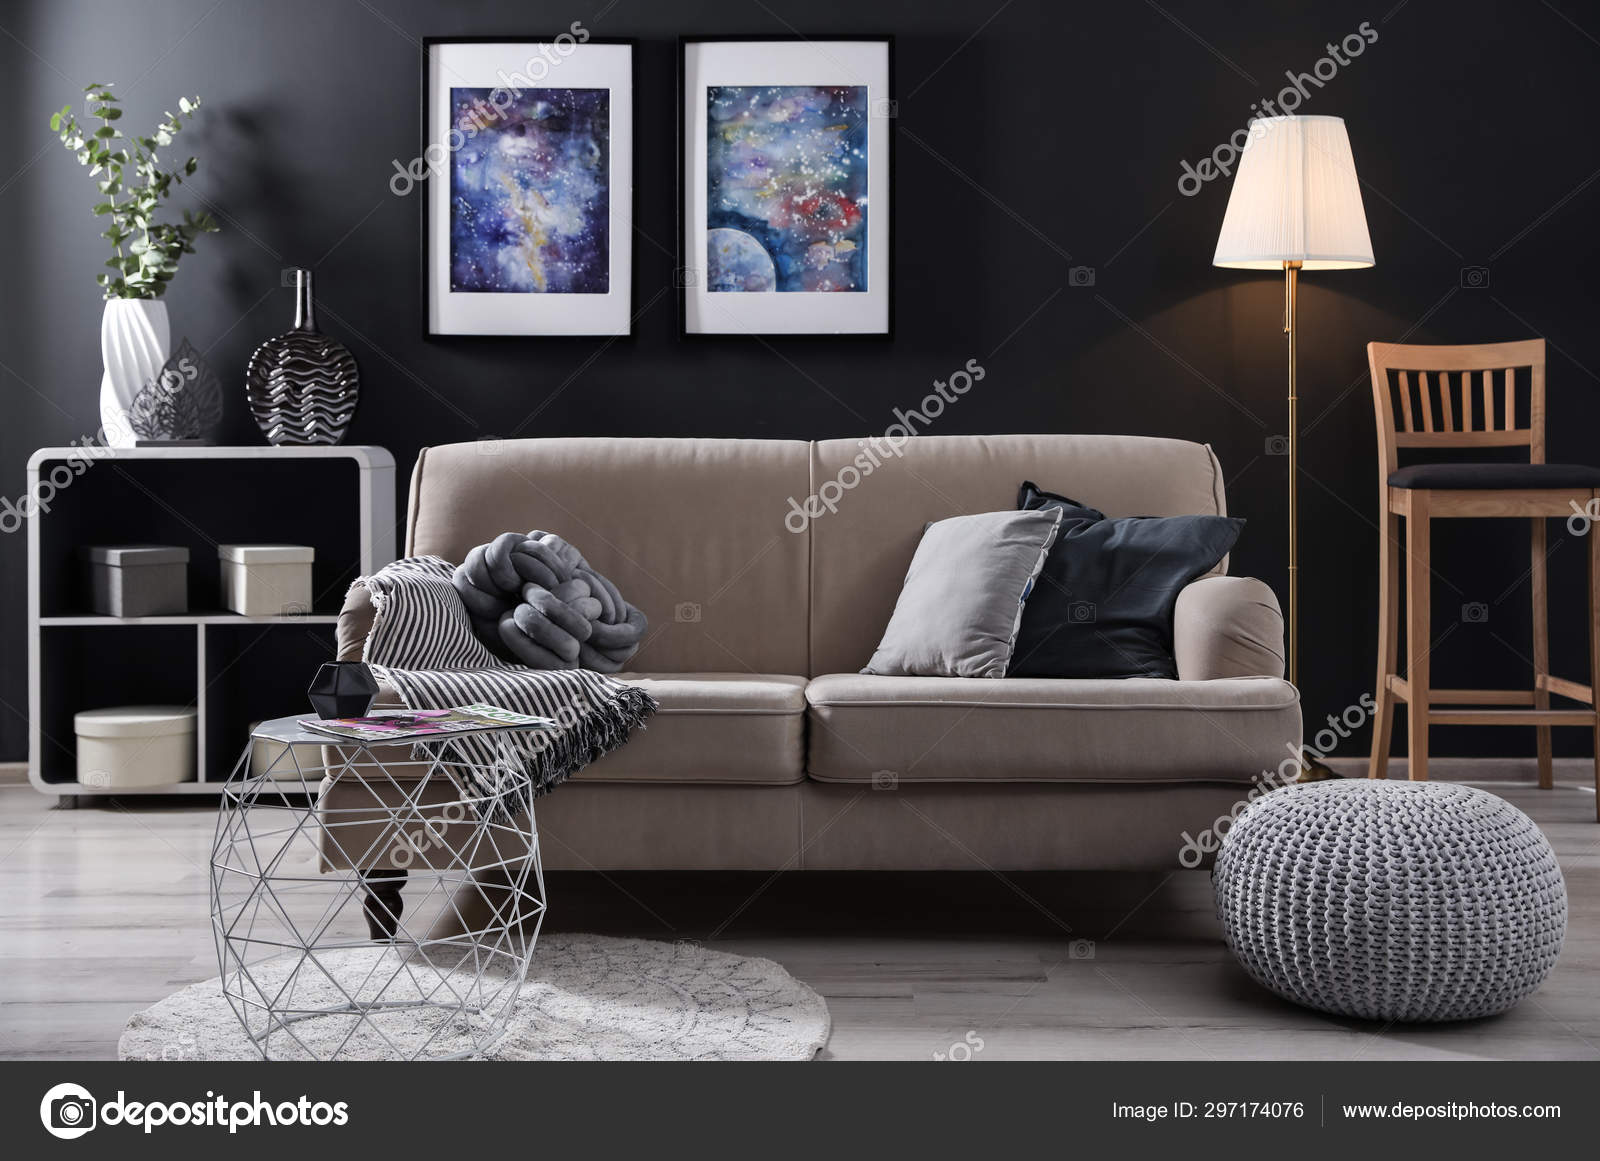 Stylish Decor Idea For Interior Design, Free Living Room Decorating Ideas